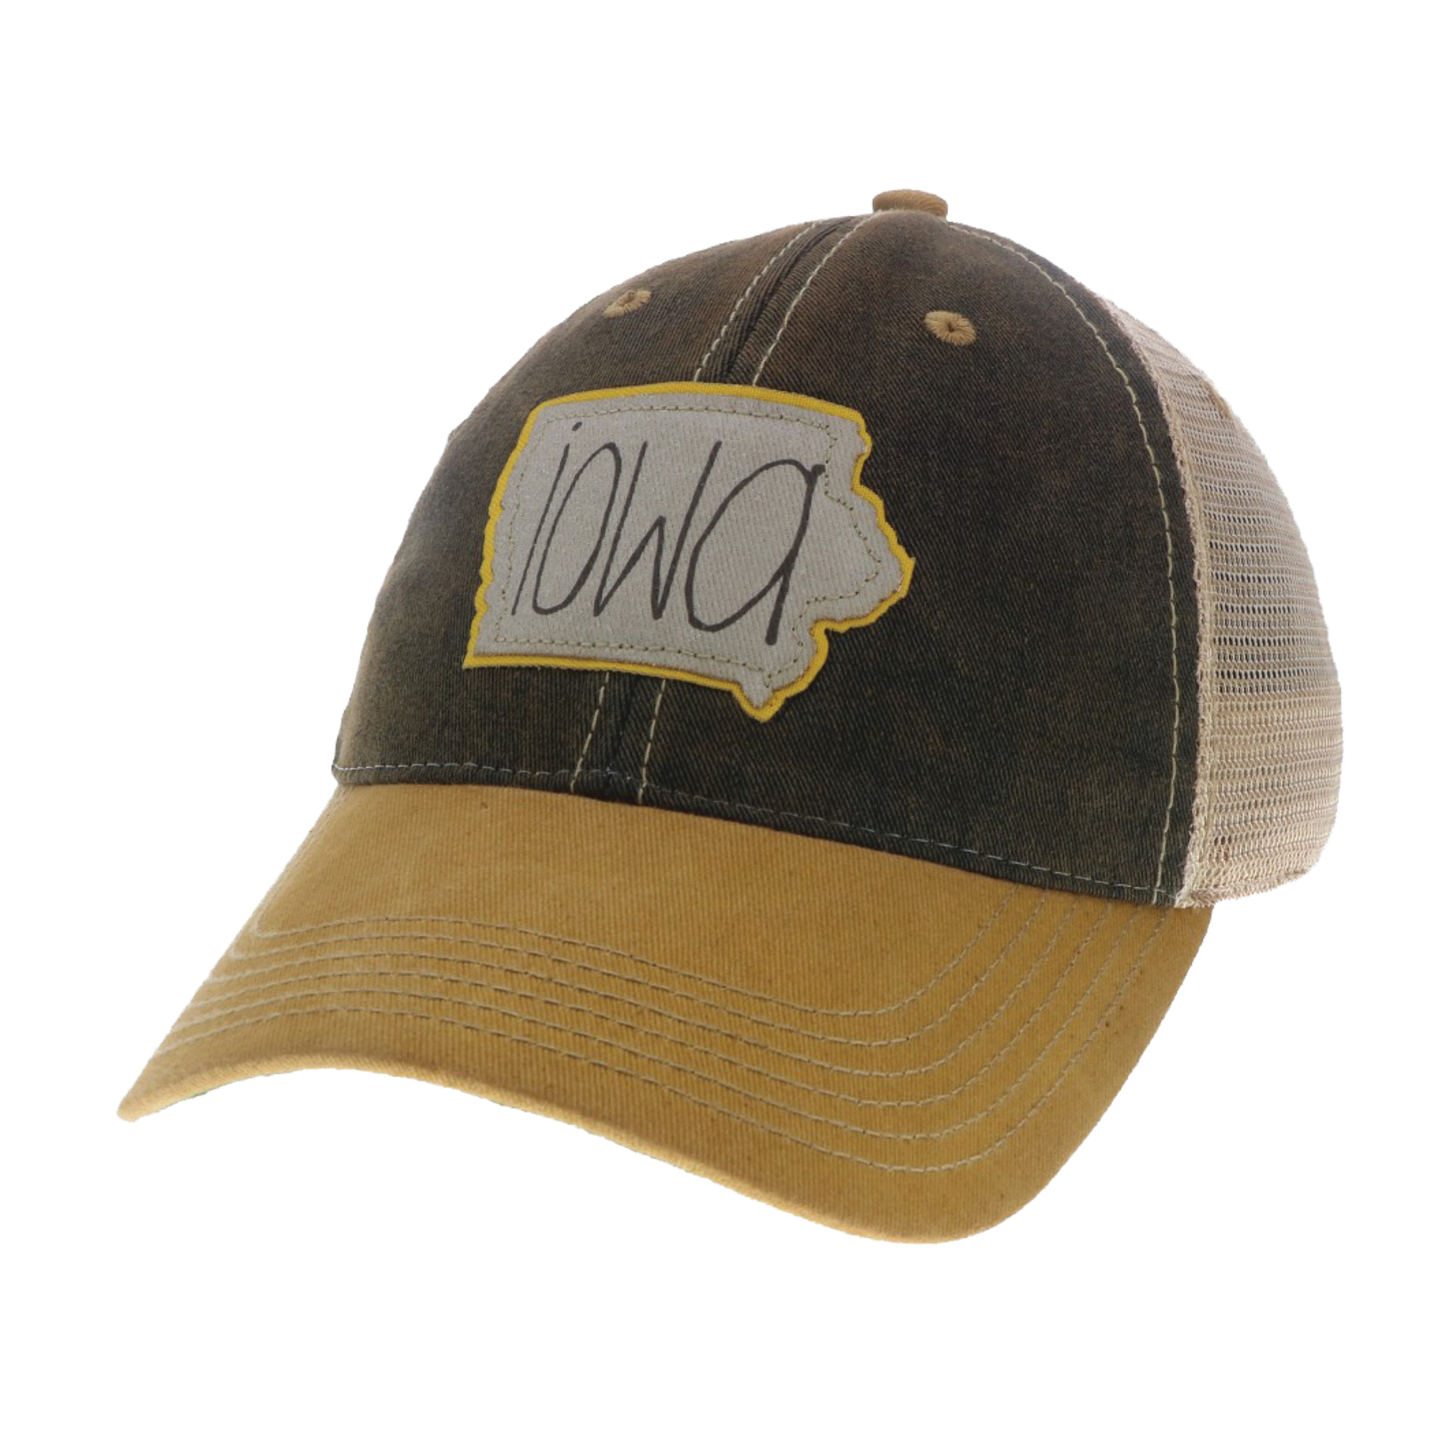 Iowa Old Favorite Trucker Hat in Black/Yellow